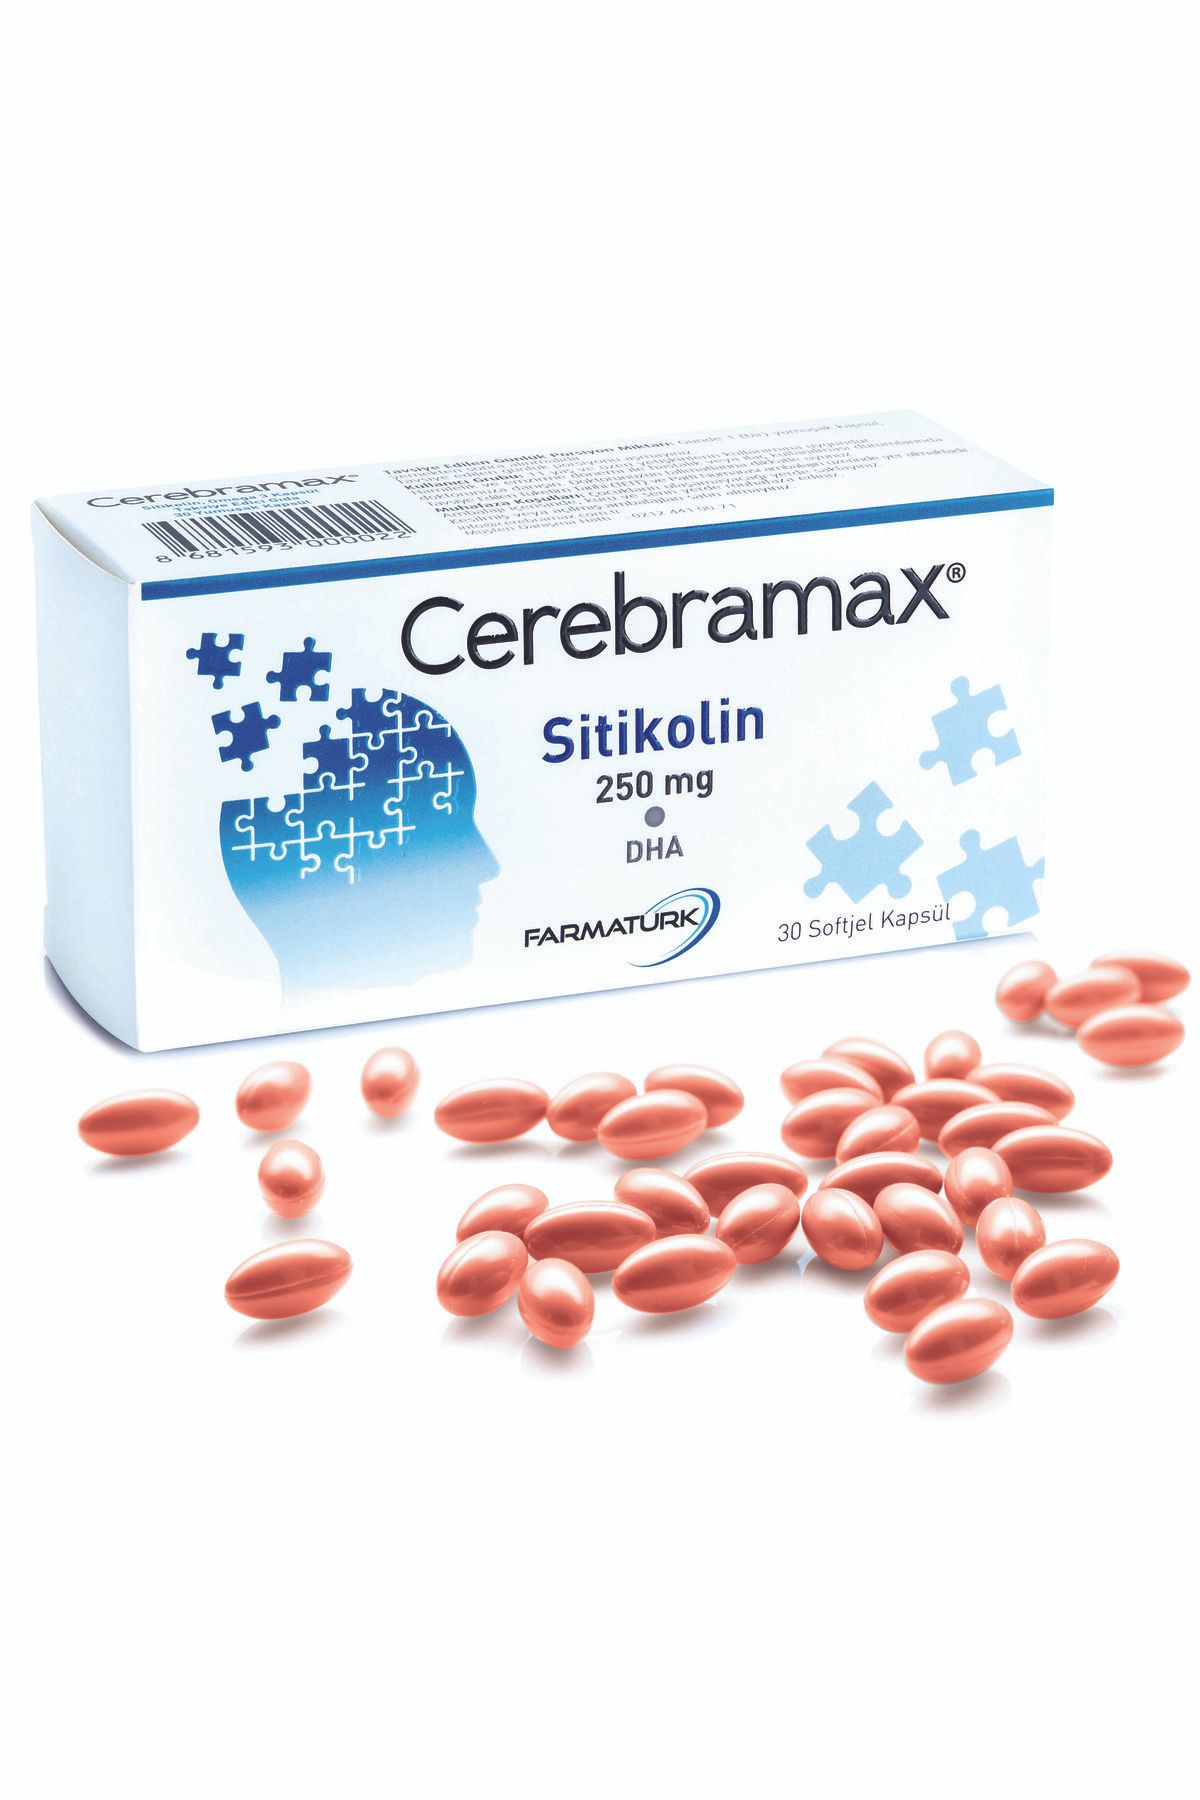 Farmaturk Cerebramax 30 Kapsül - Sitikolin Içerikli